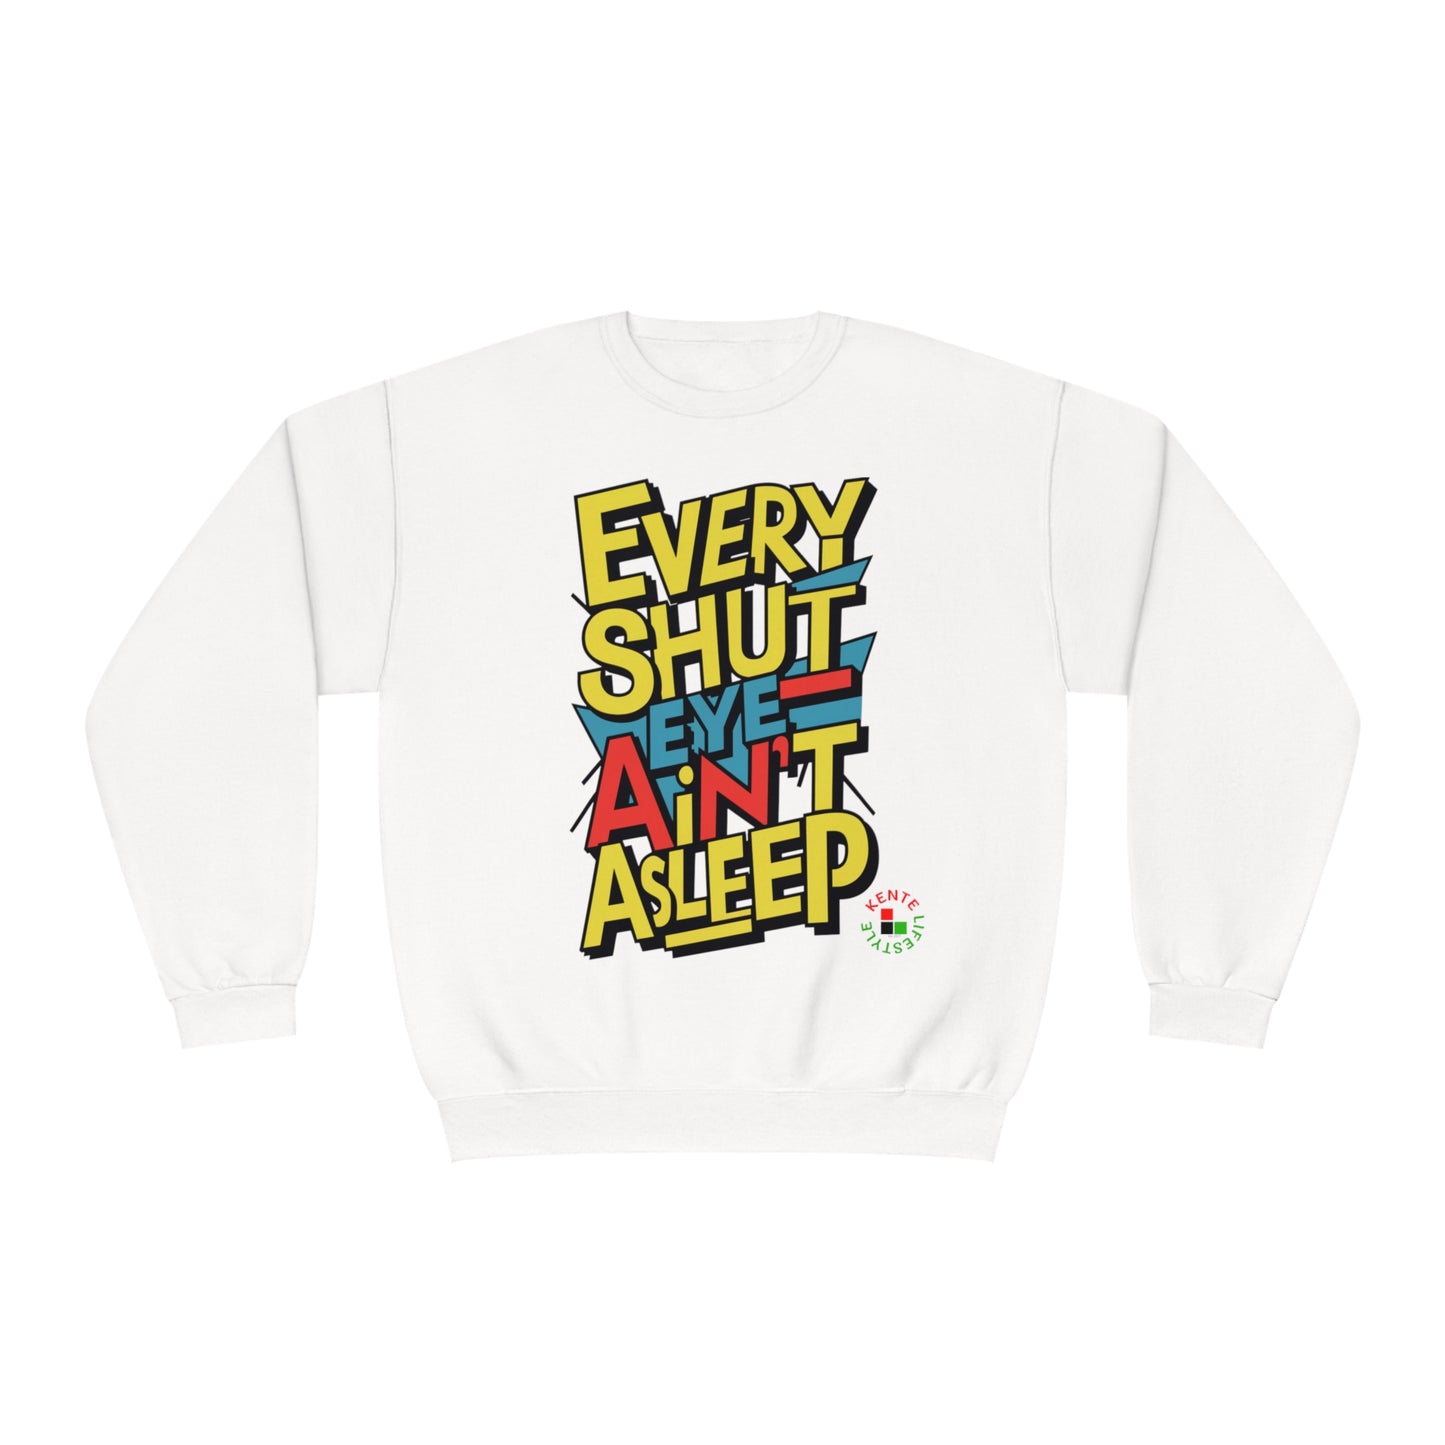 Every Shut Eye Ain't Asleep - Sweatshirt